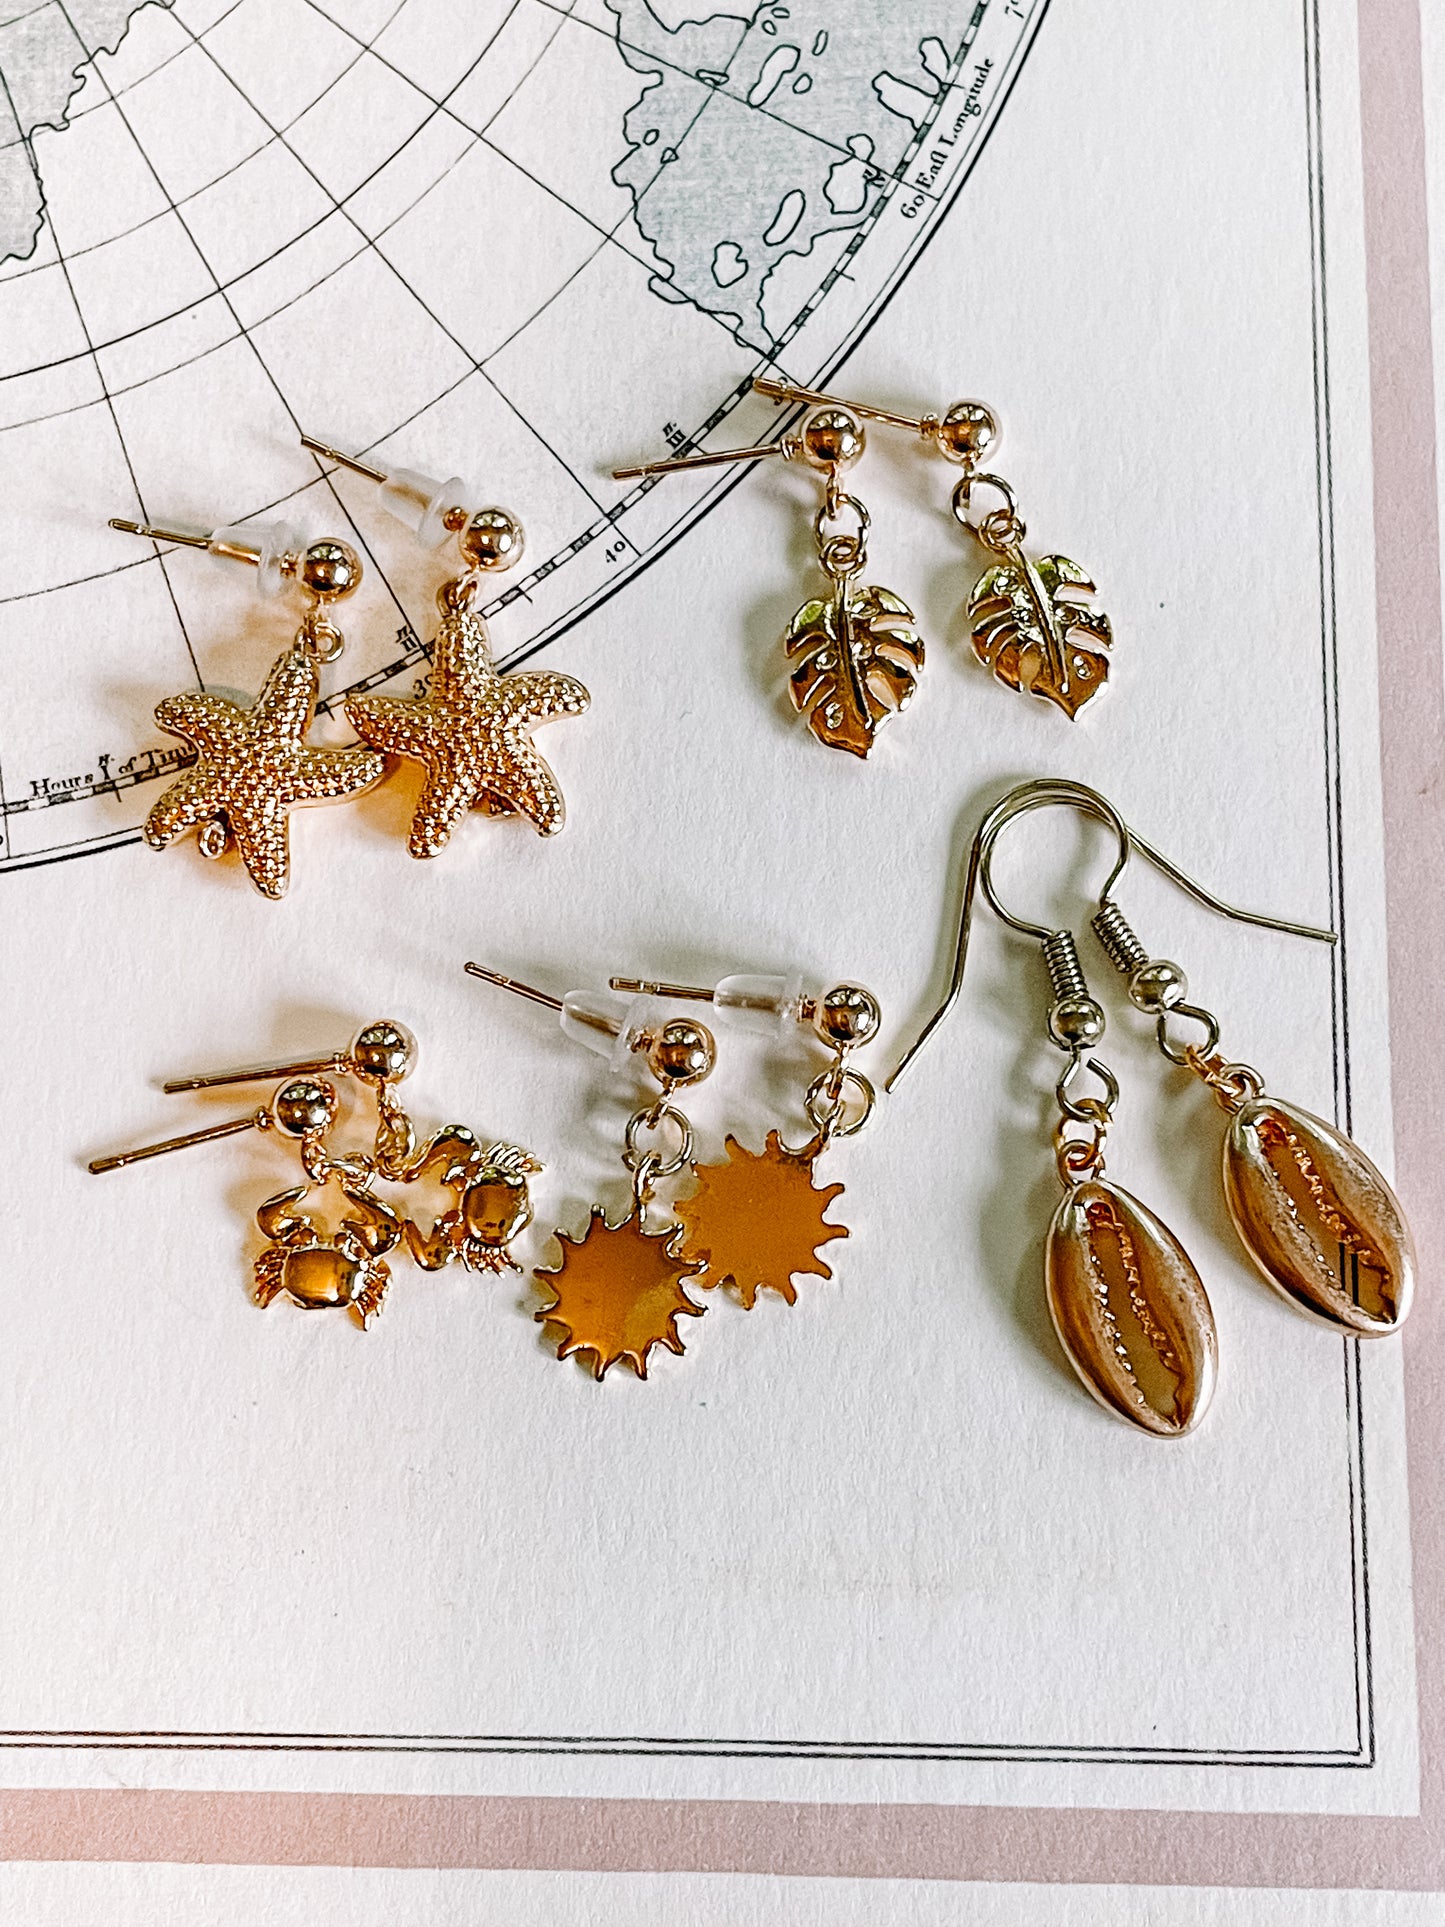 Crabby earrings